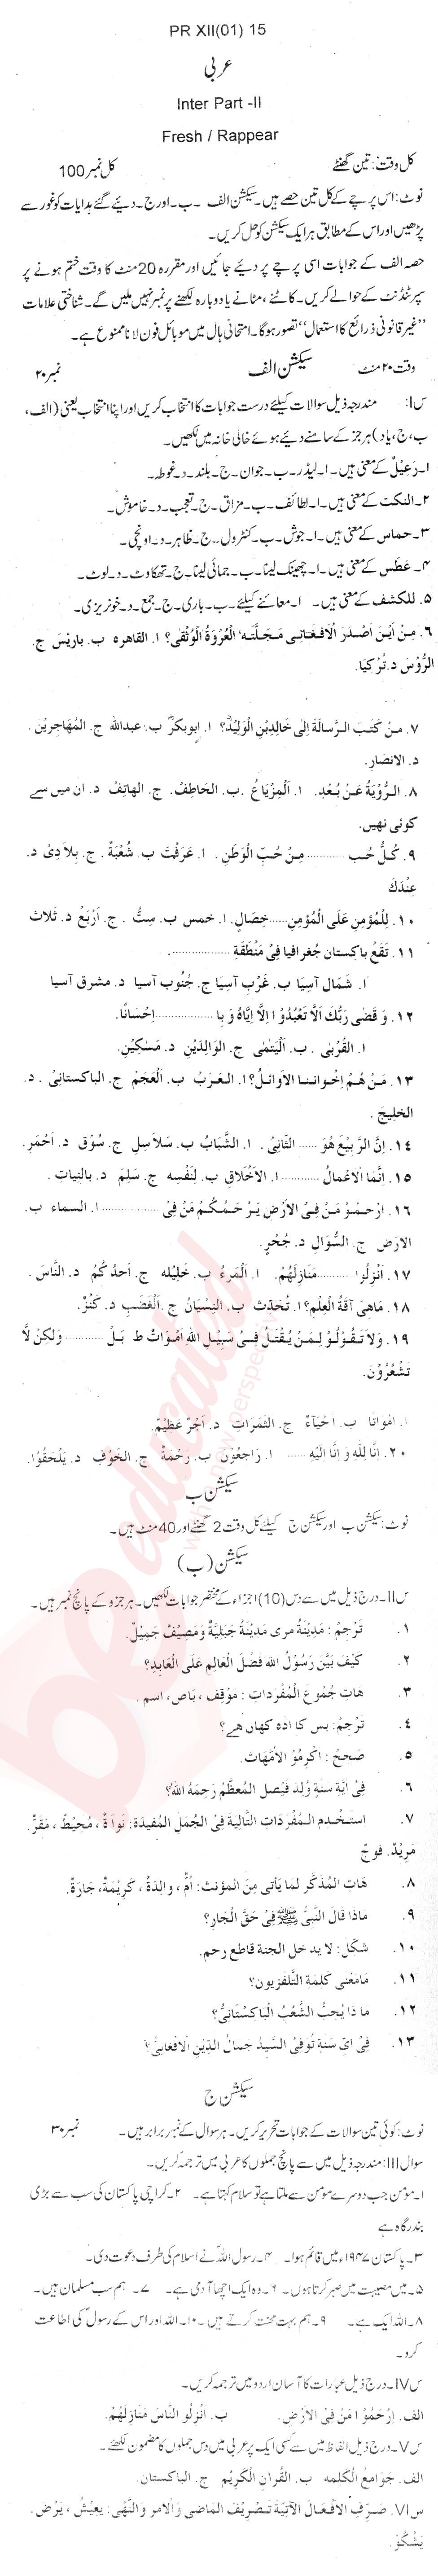 Arabic FA Part 2 Past Paper Group 1 BISE Swat 2015